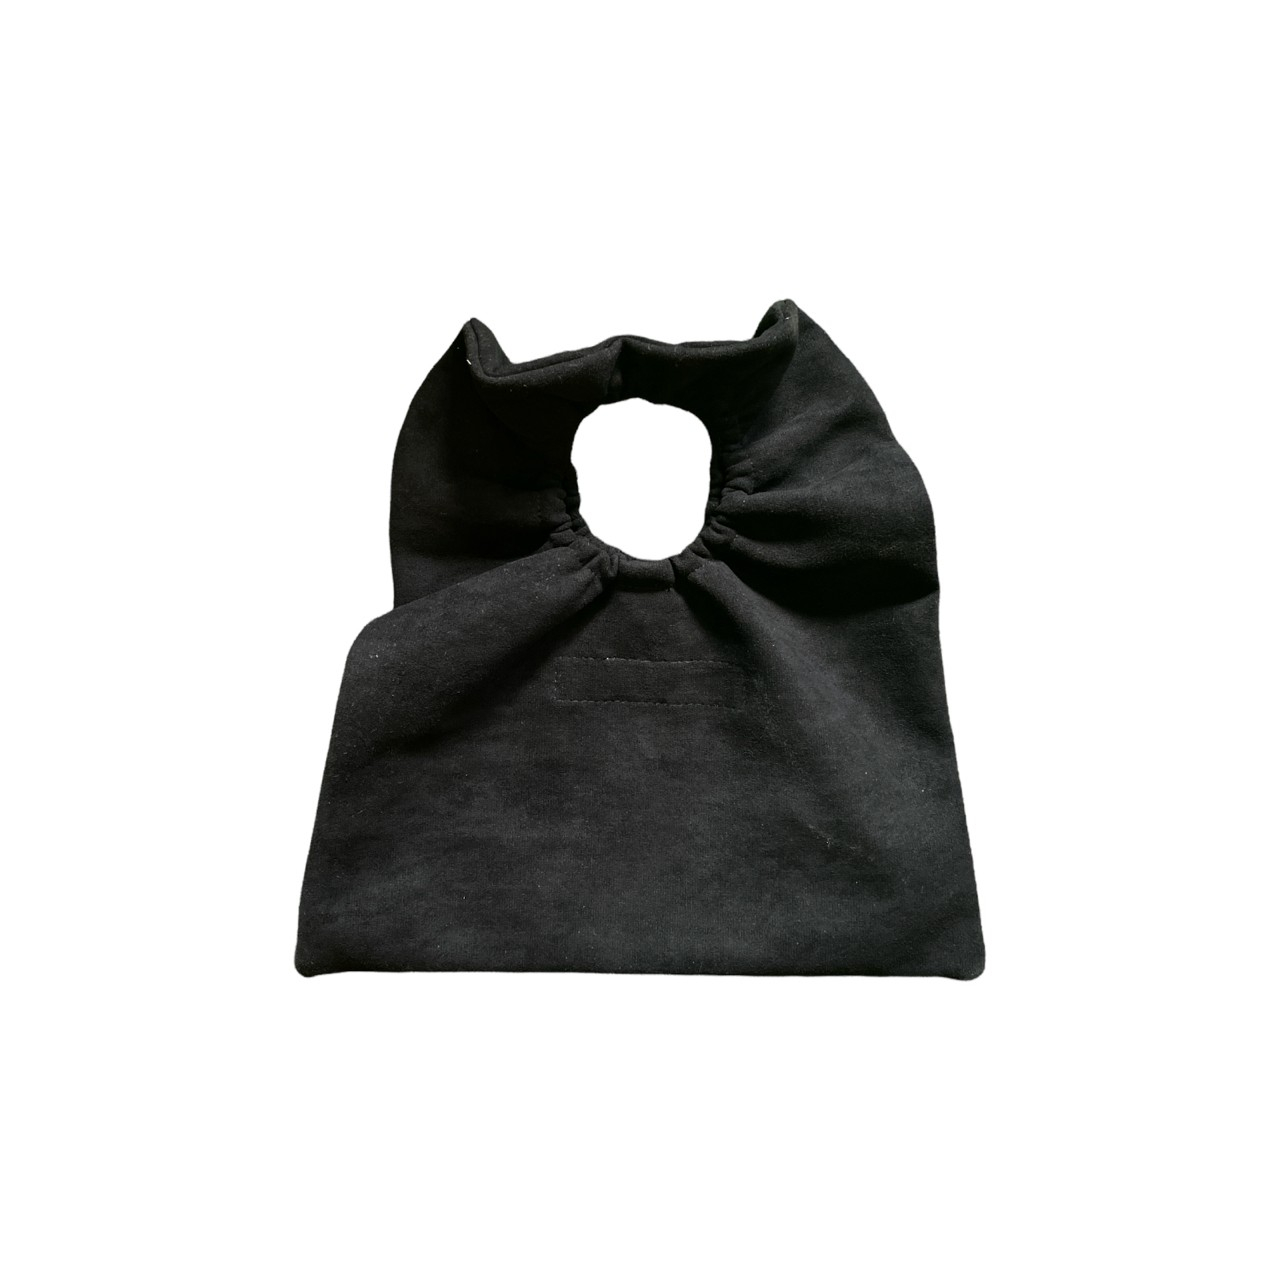 Lena Hand Bag (Black)